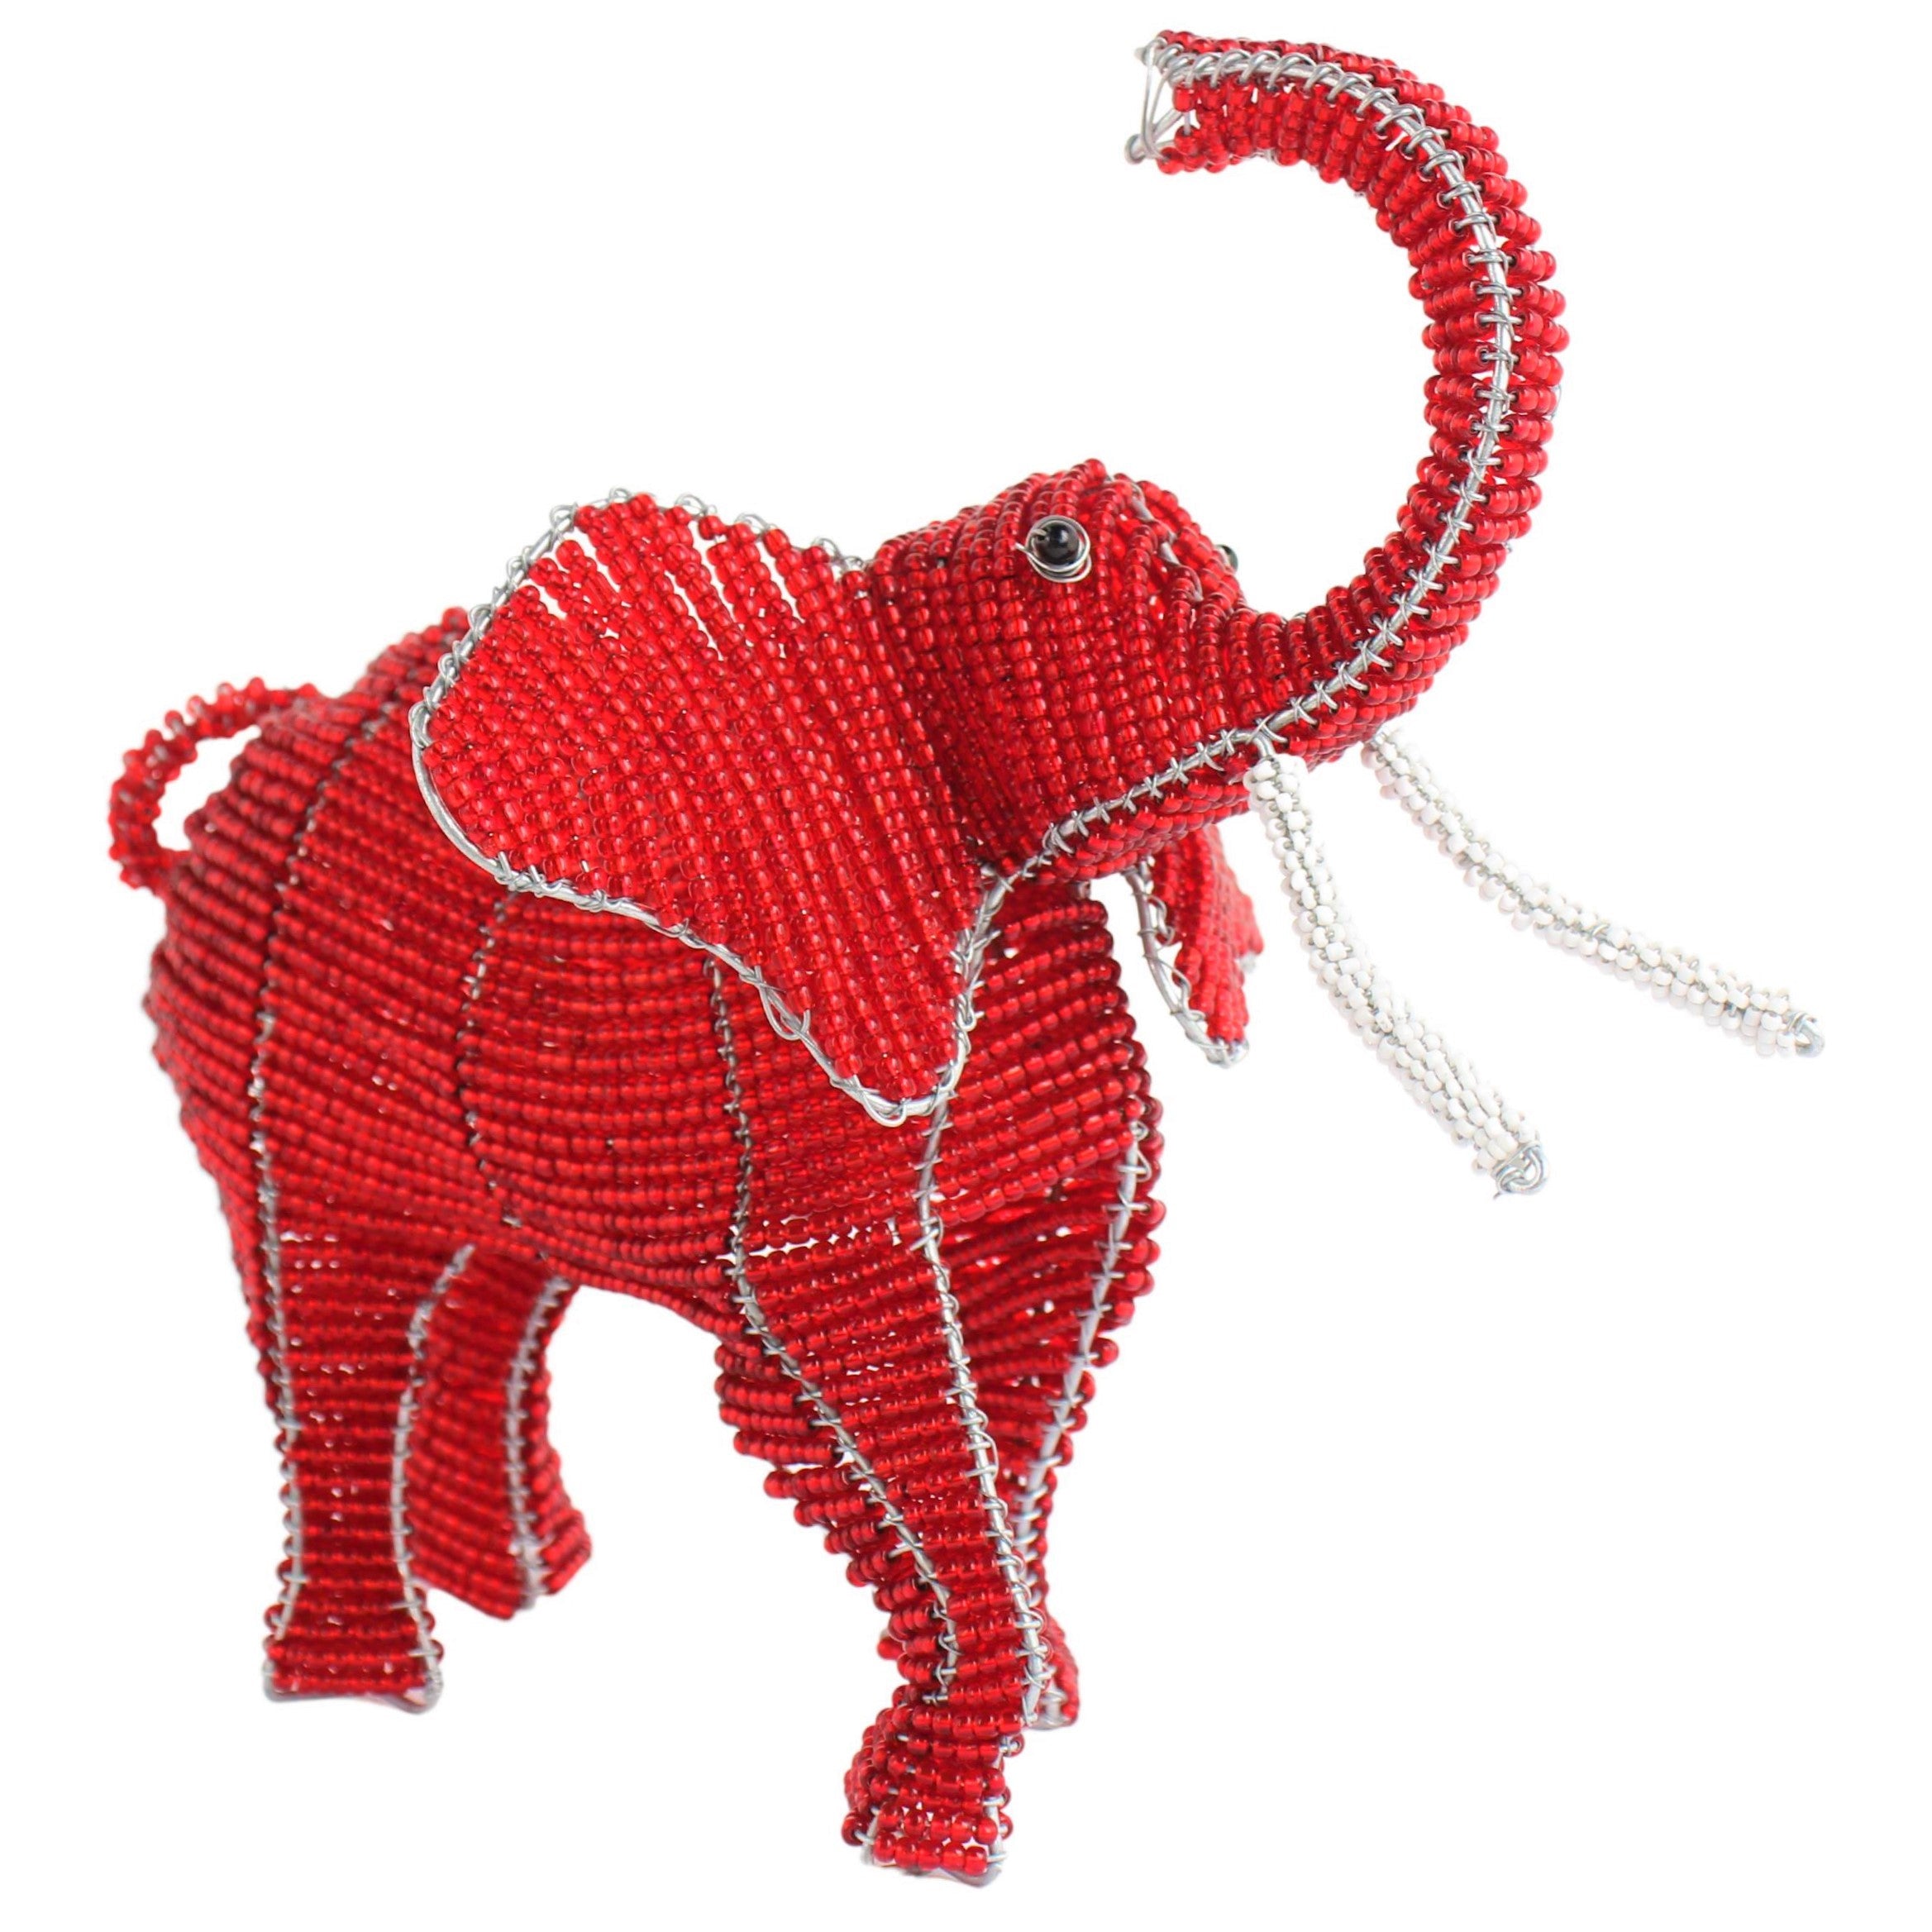 Shona Tribe Wire and Beaded Animals - Elephant ~9.8" Tall - Wire and Beaded Animals